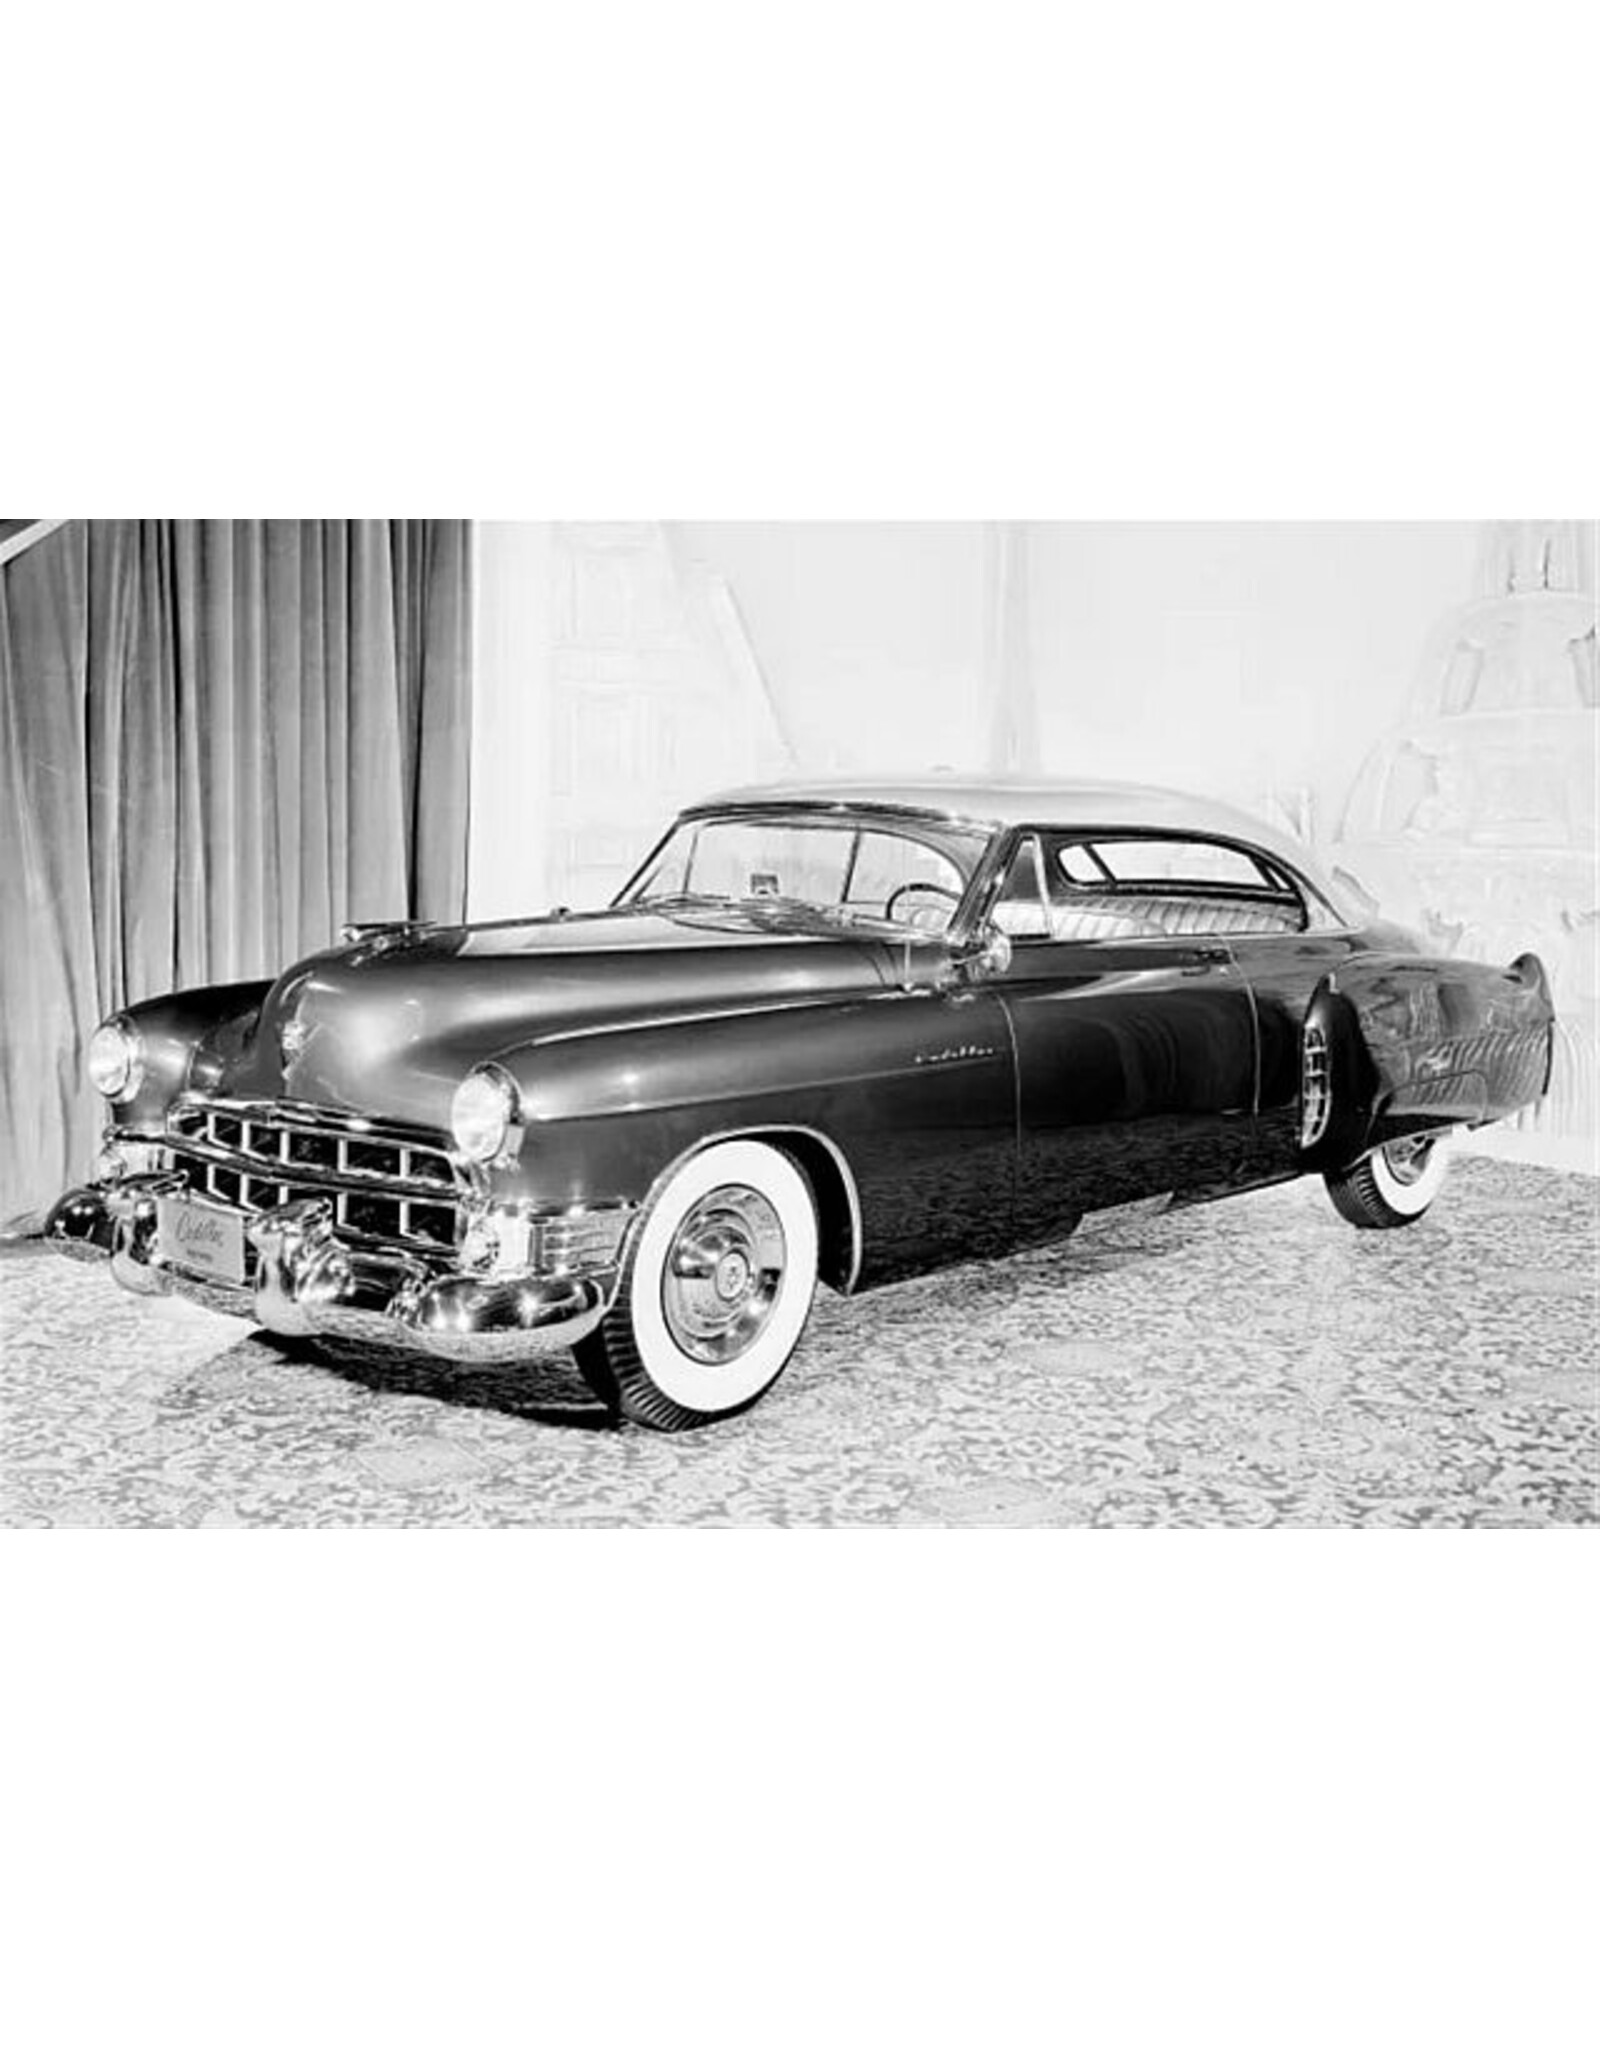 Cadillac(General Motors) Cadillac Coupe Deville Show Car(1949)silver metallic/gun metal